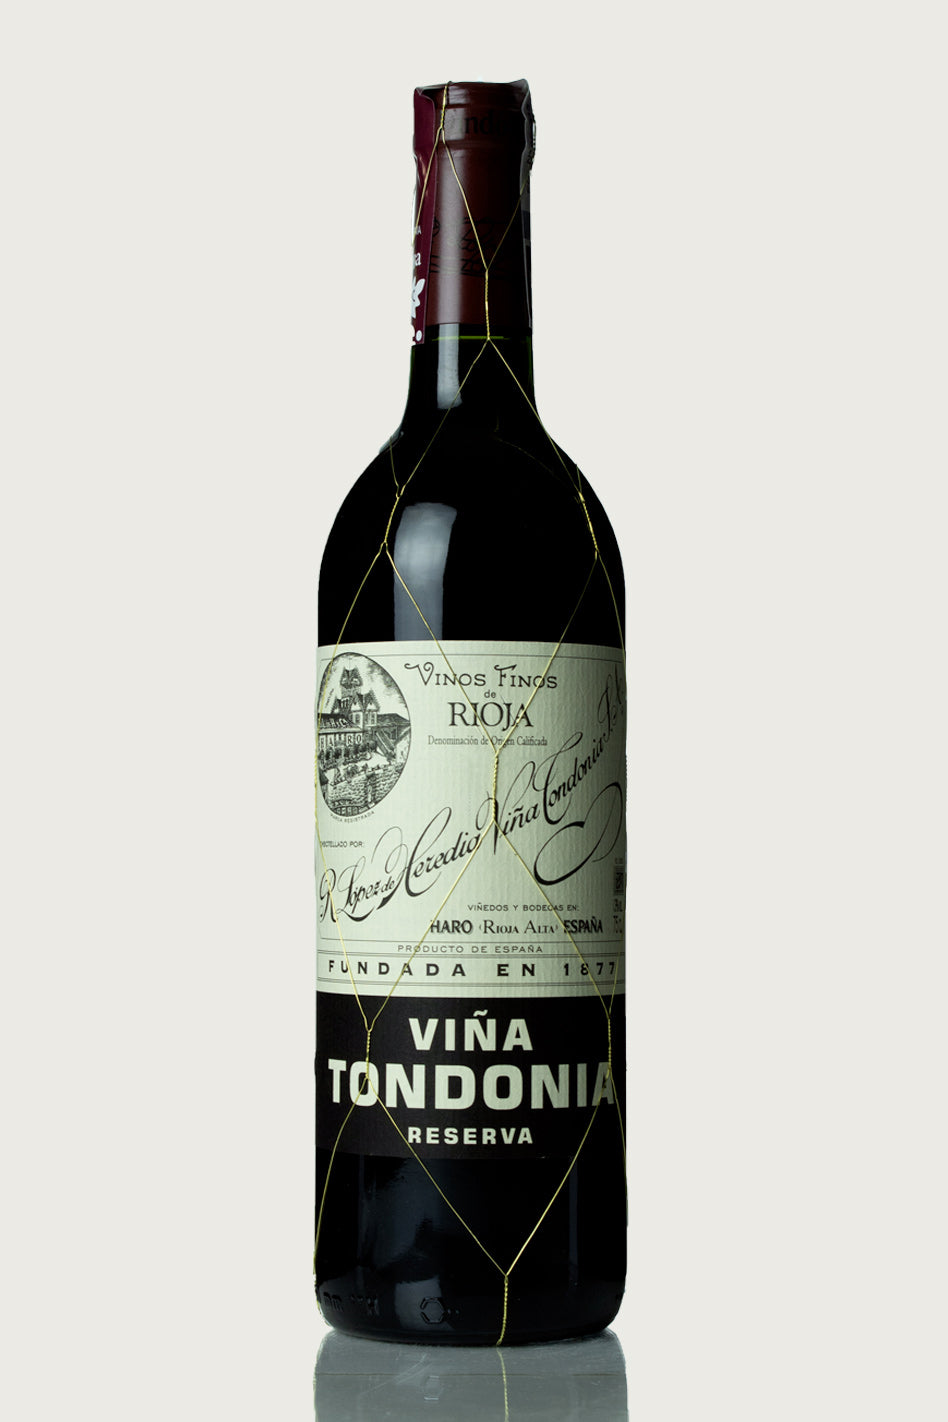 López de Heredia Viña Tondonia Rioja Reserva Tinto 2001